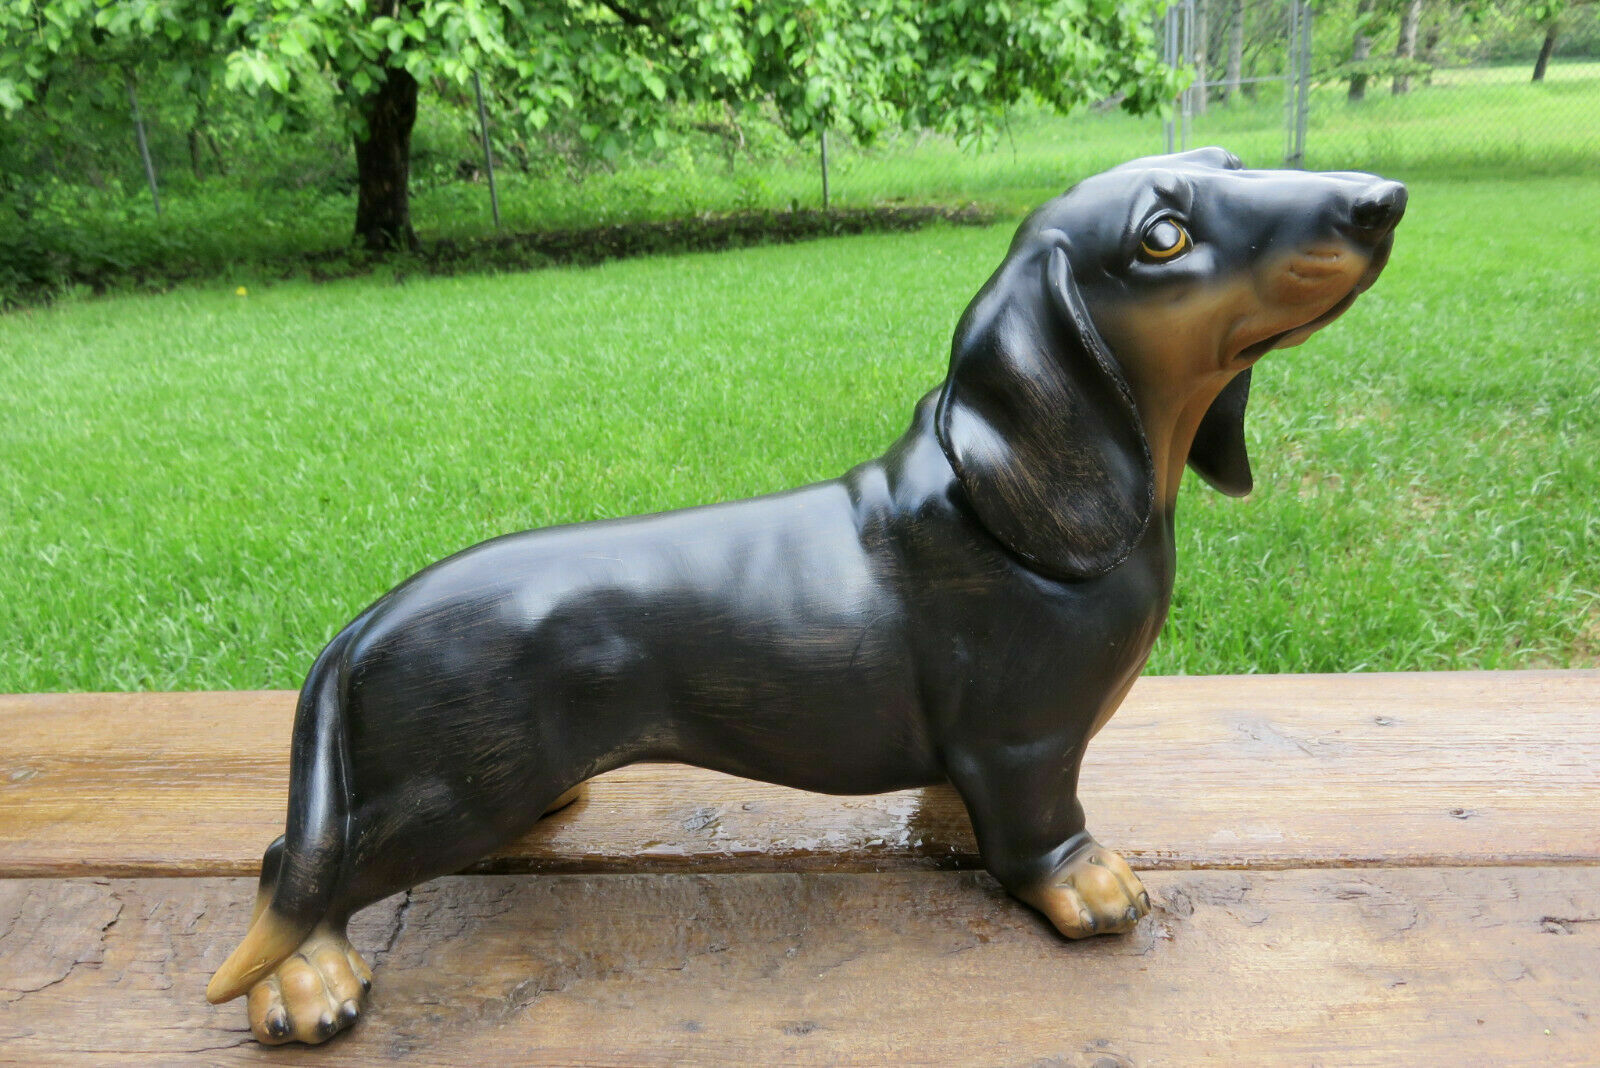 Dachshund Dog Figurine Resin Statue Lawn Yard Garden Ornament Puppy New 13 in.L